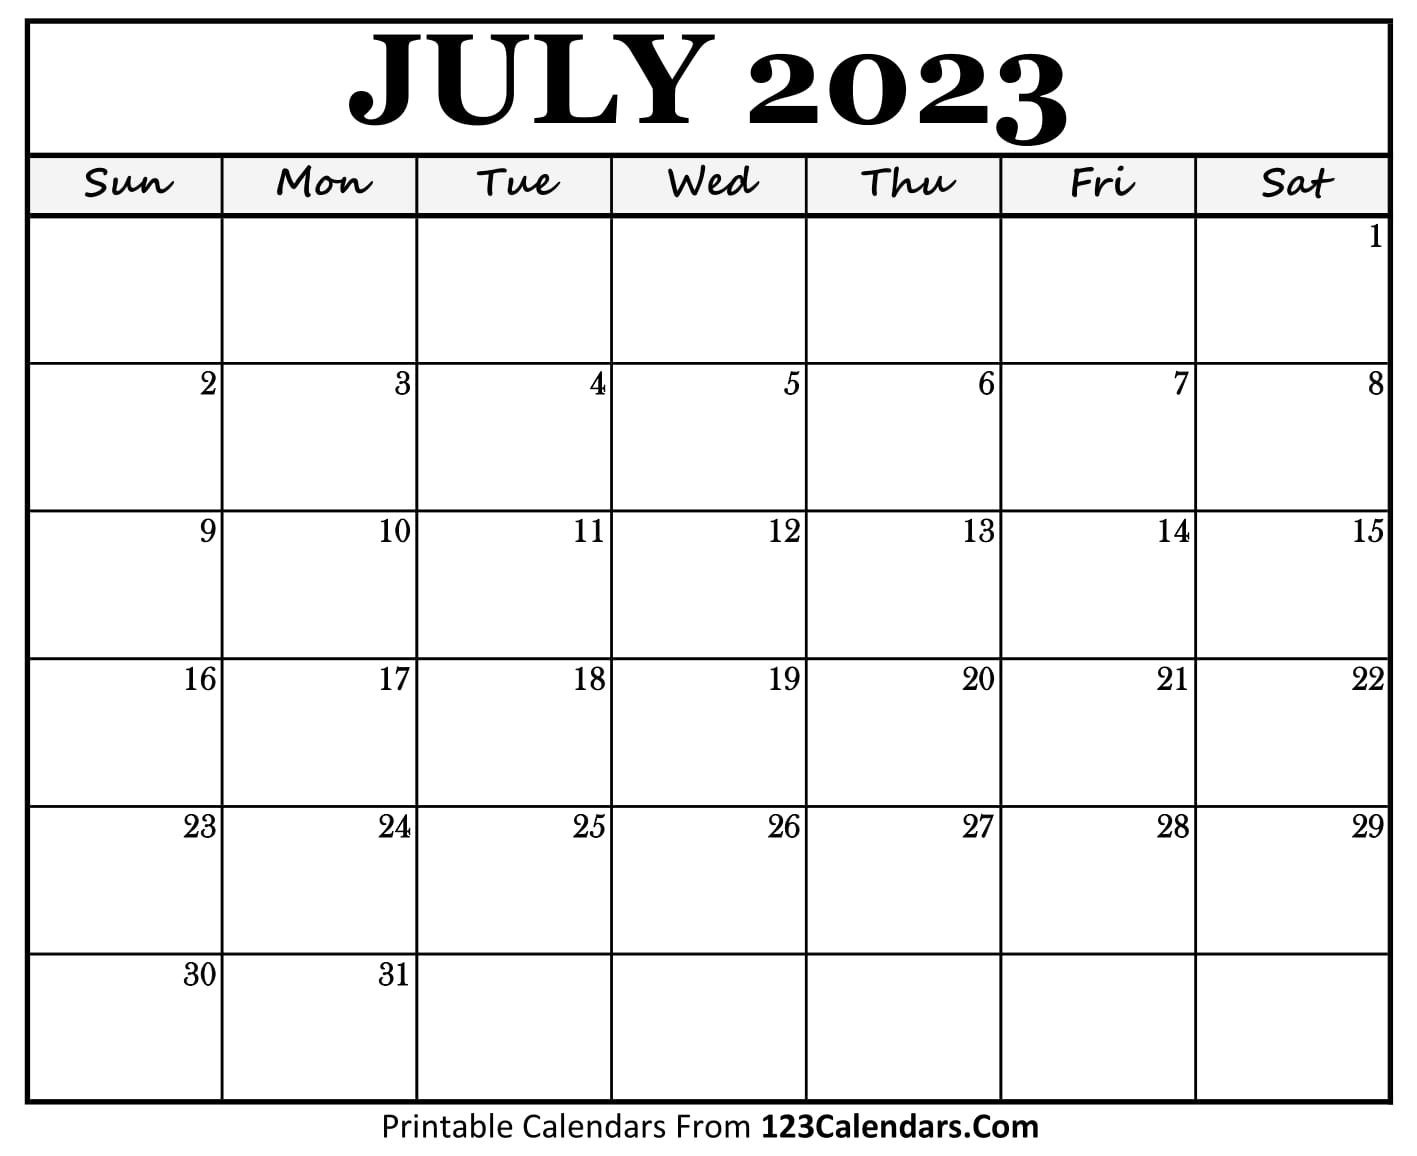 printable-july-2023-calendar-templates-123calendars